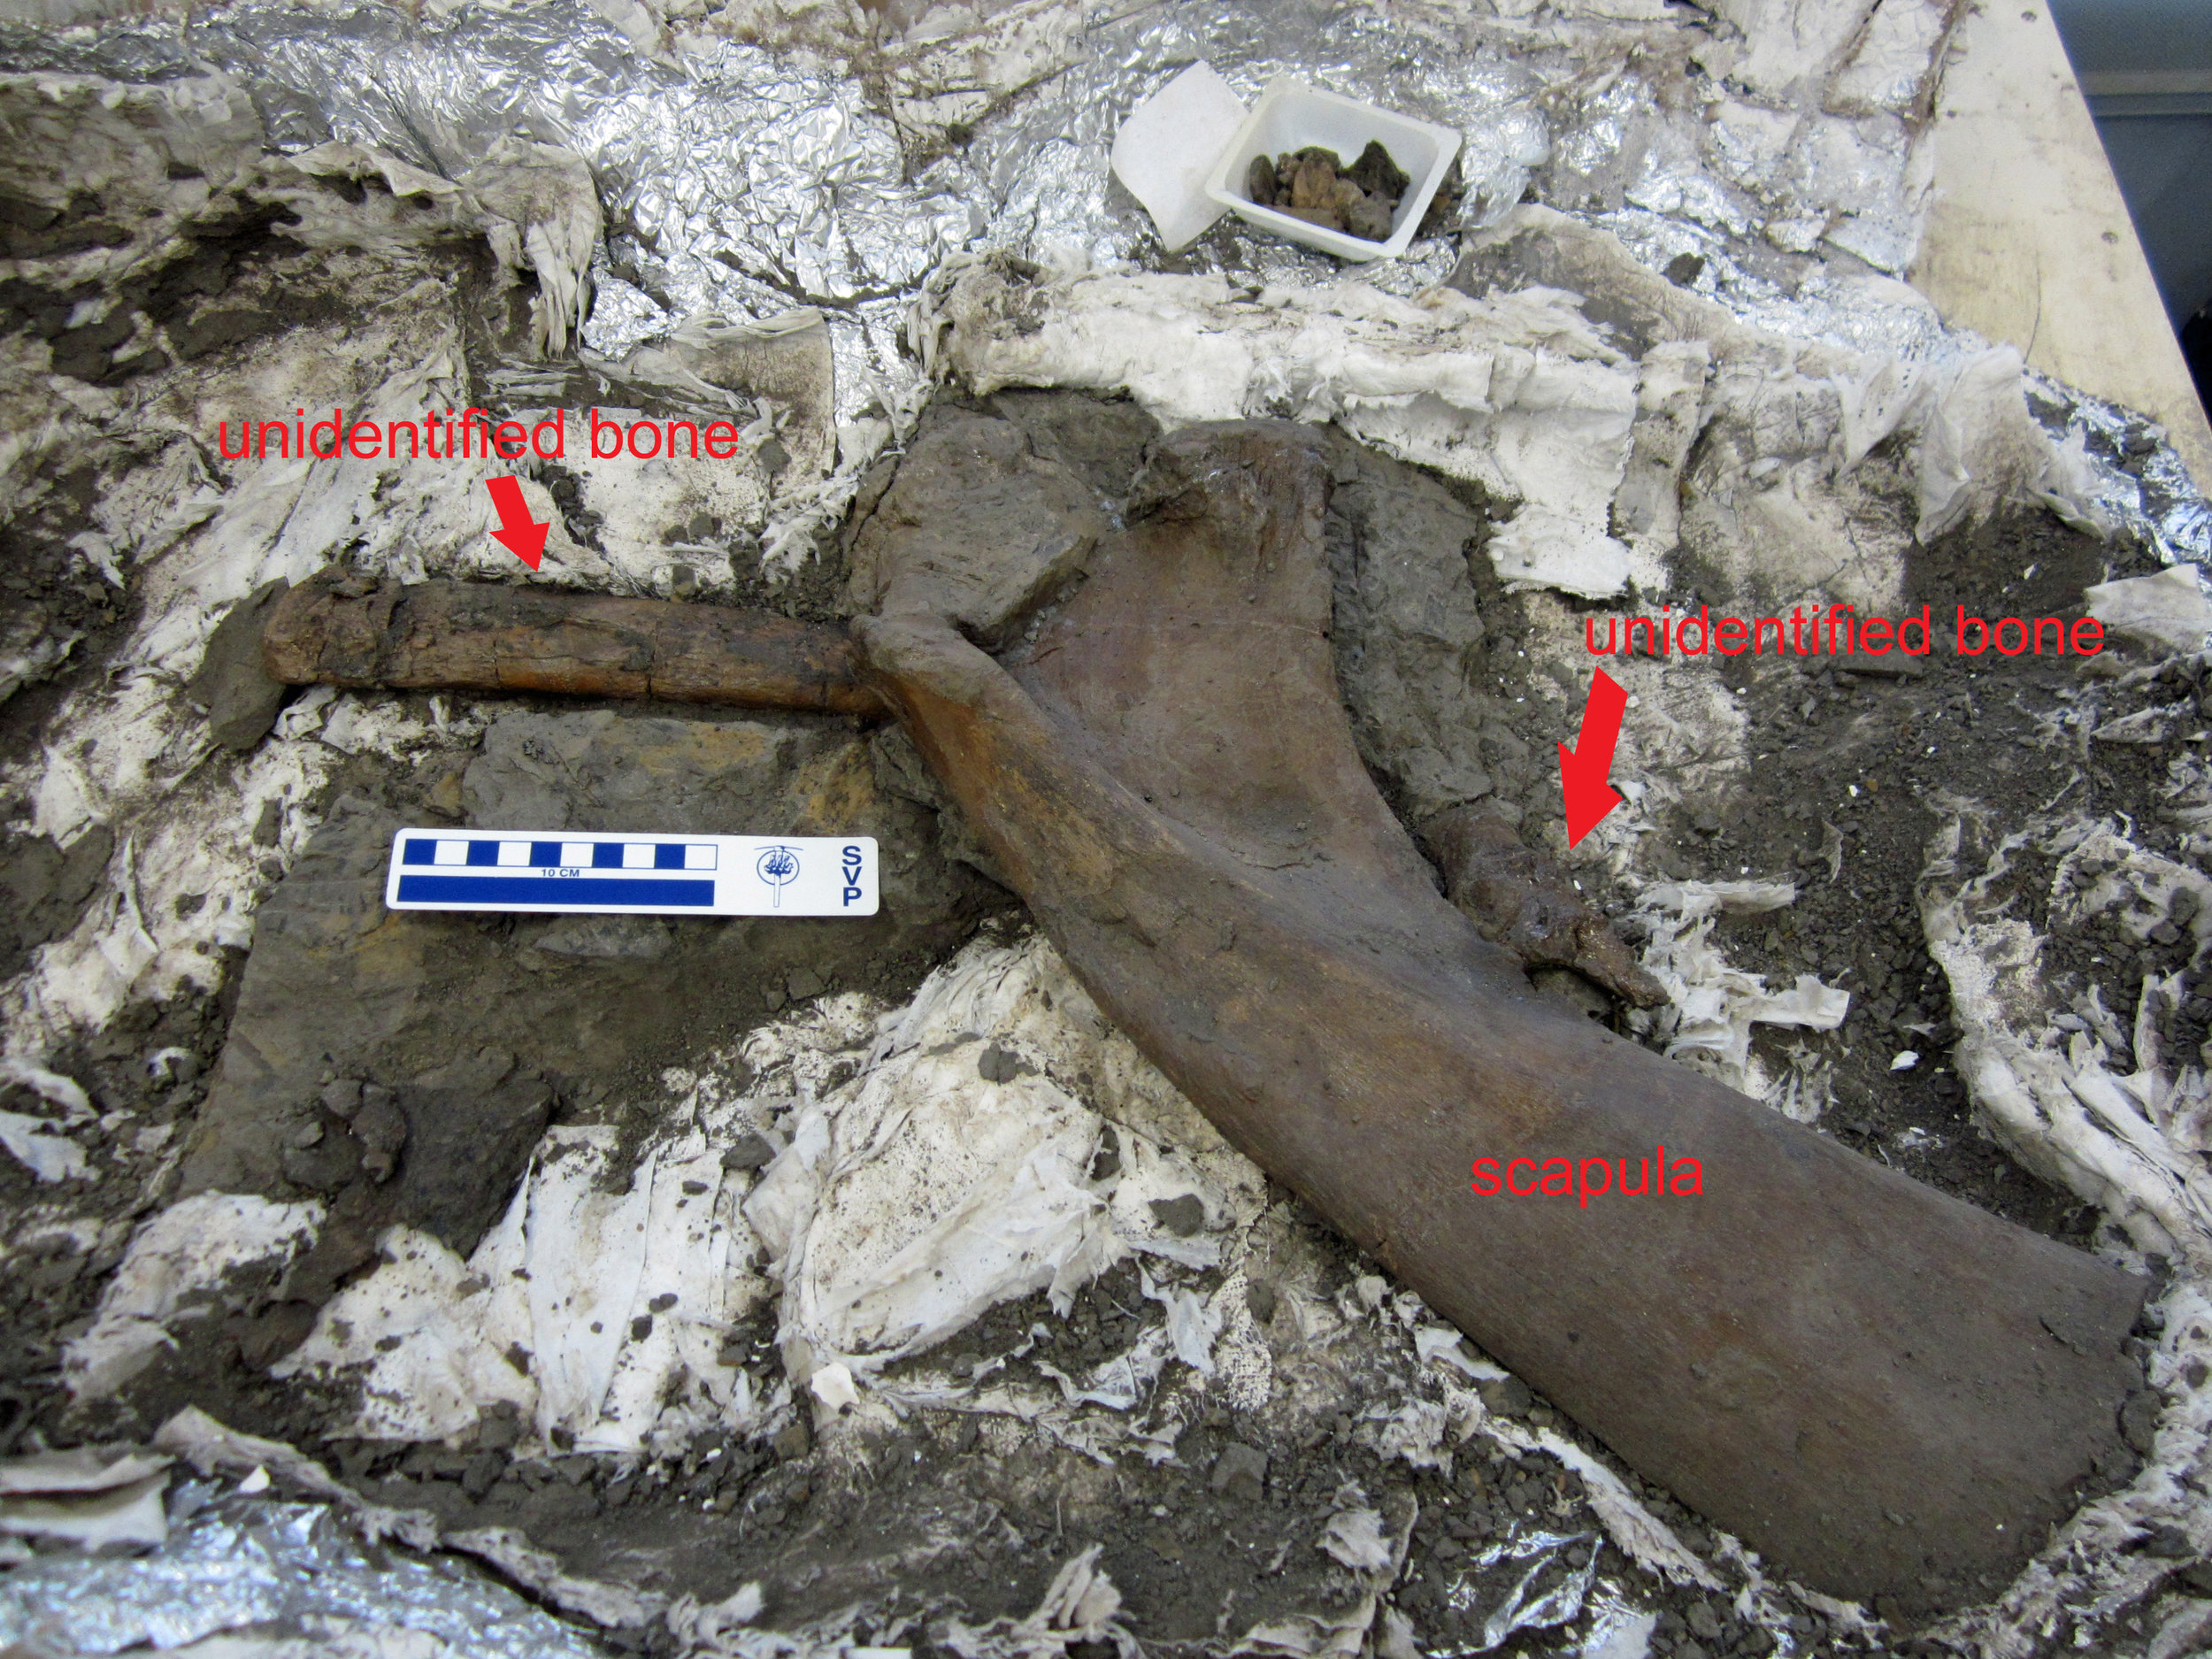 Hadro scapula and other bones